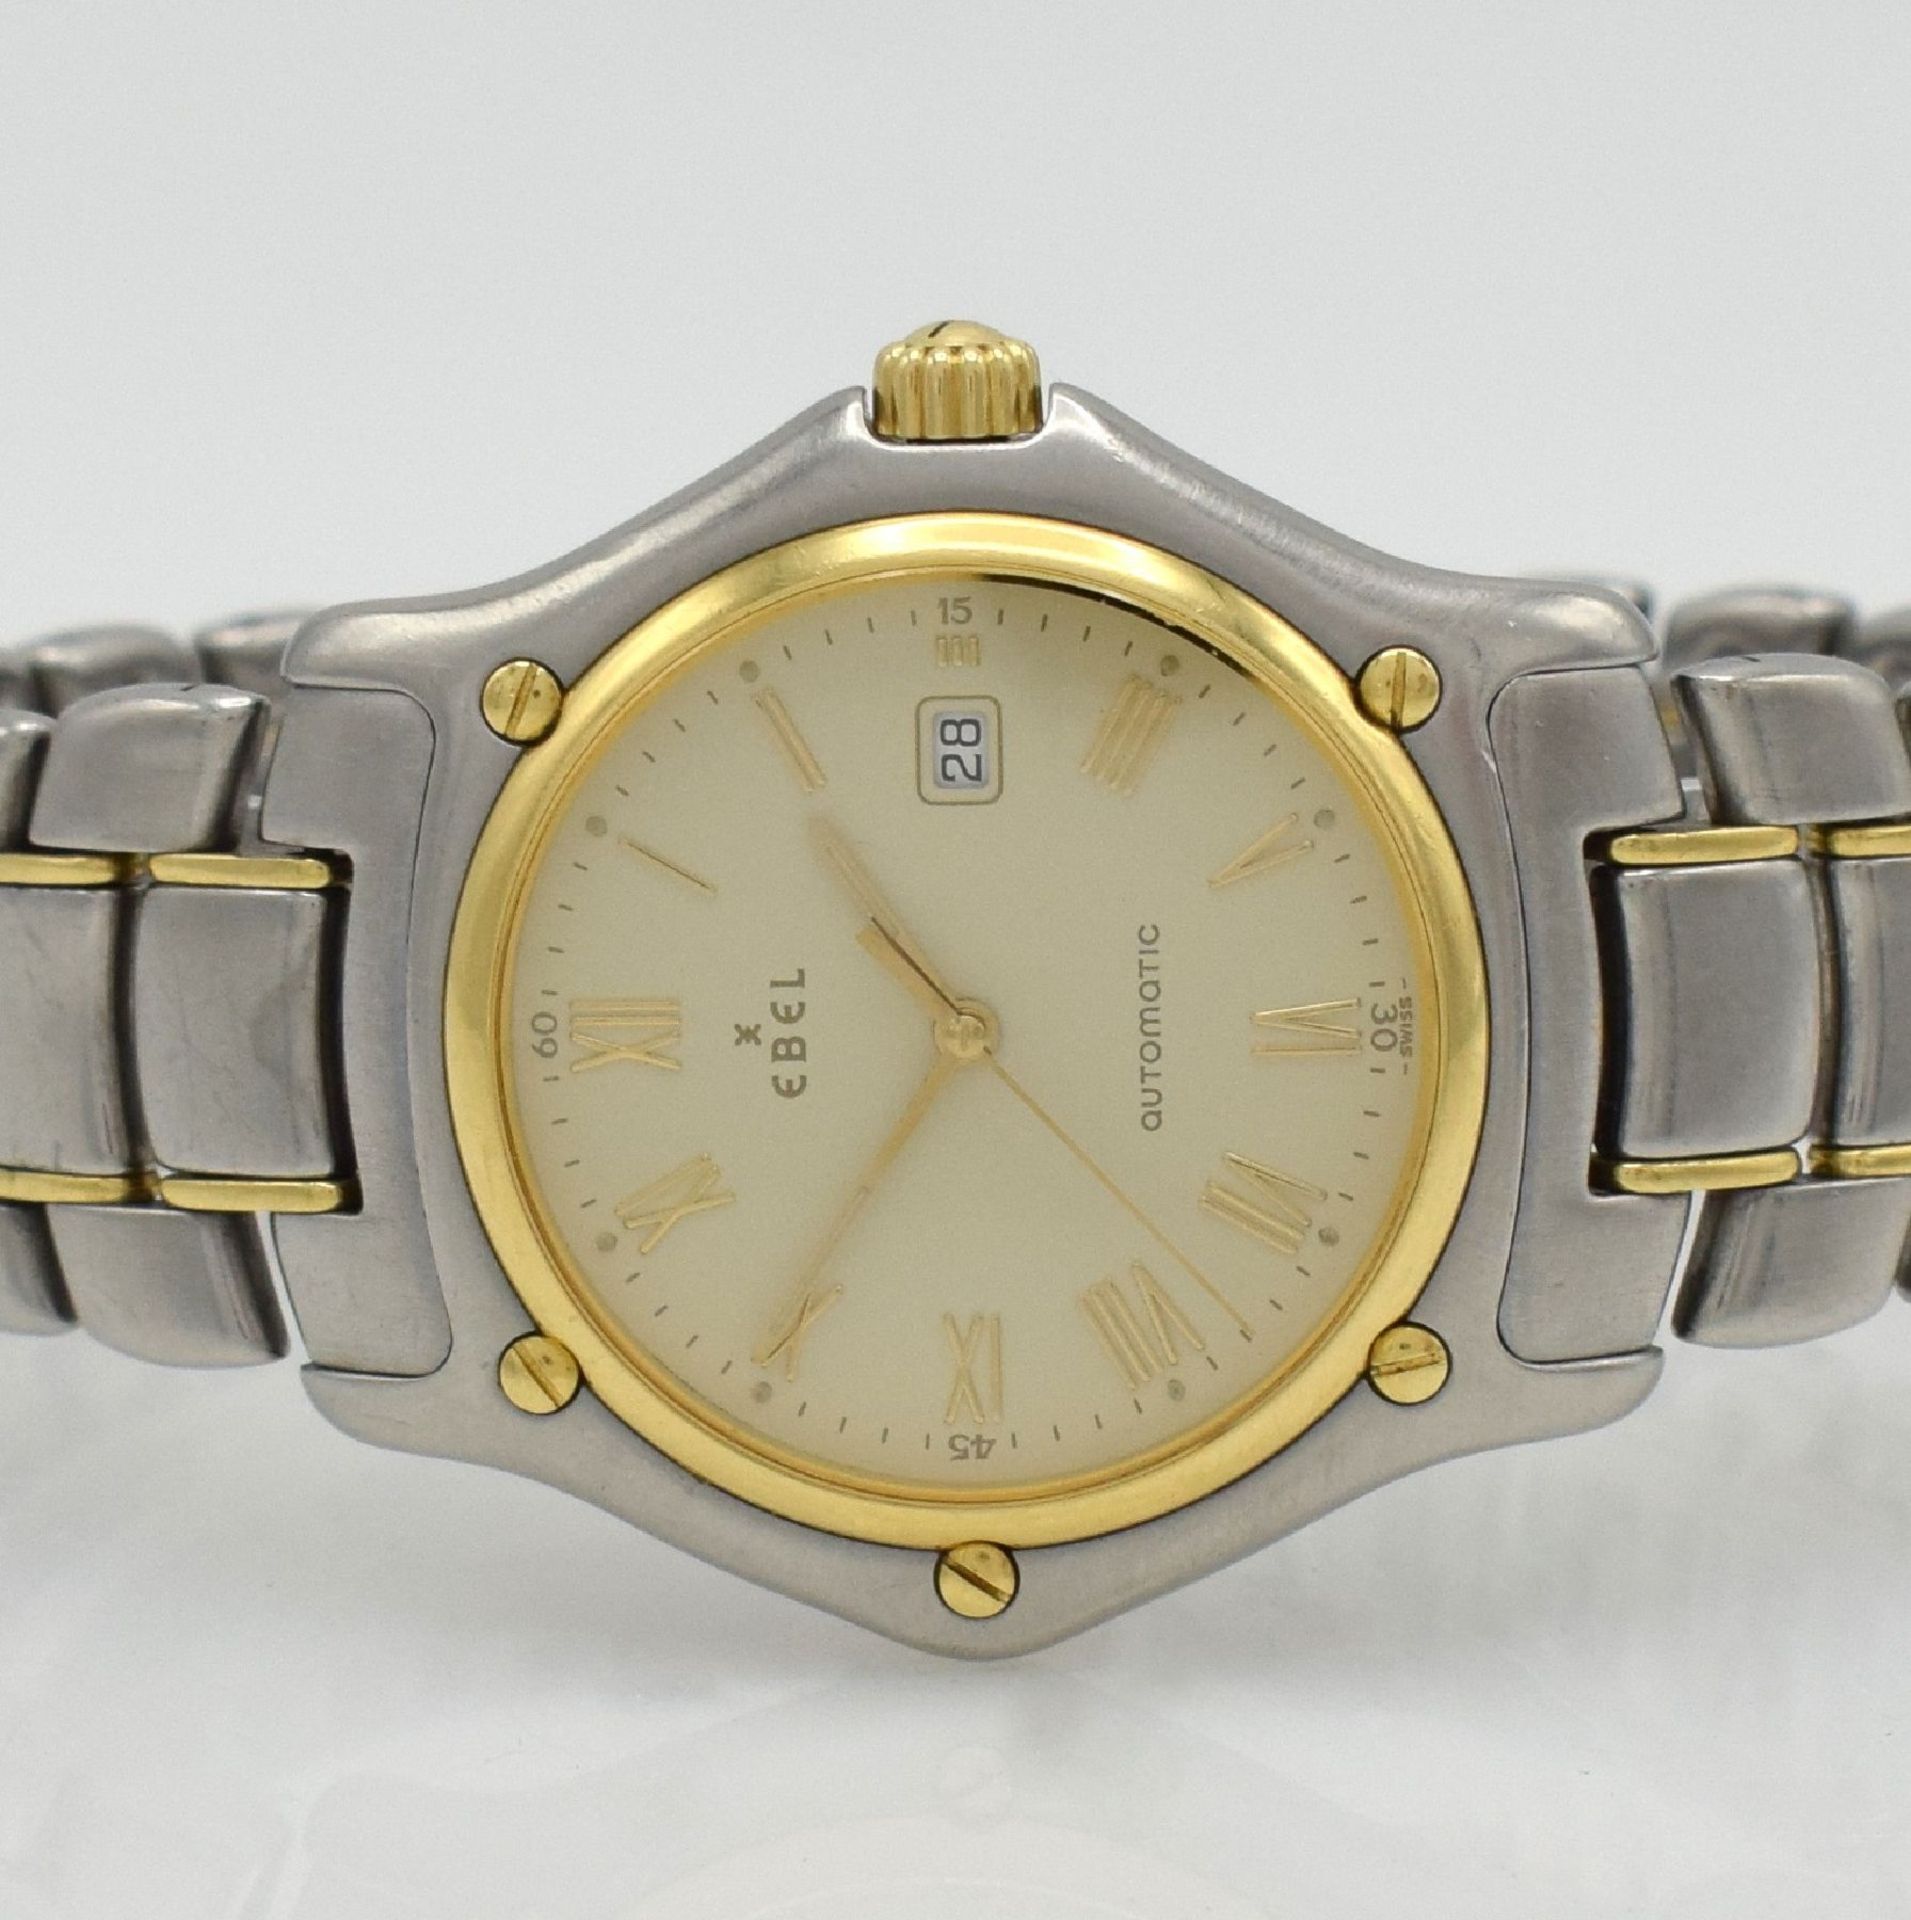 EBEL 1911 wristwatch in stainless steel/gold, Switzerland sold according to warranty card inMay - Bild 2 aus 10